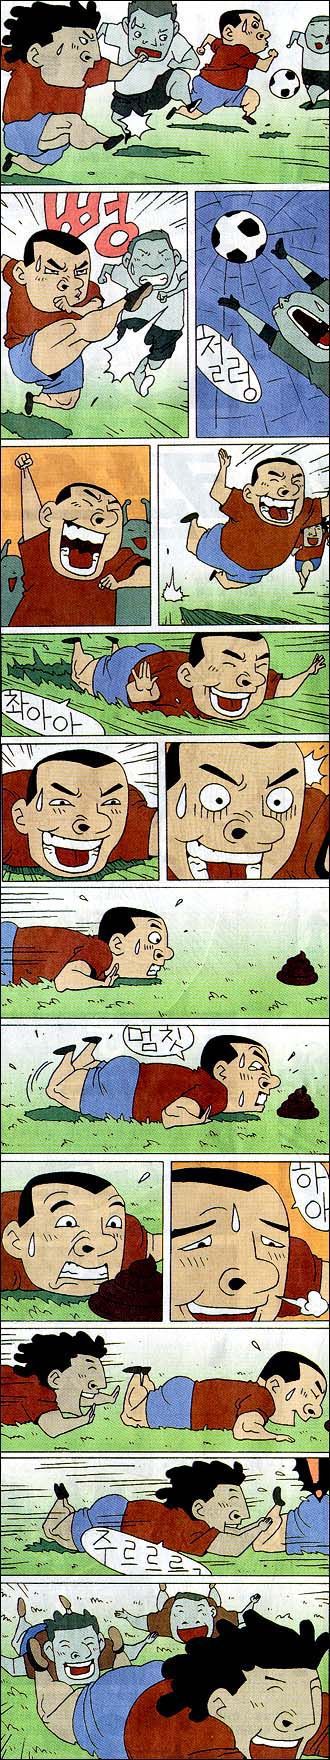 funny_korean_comic_640_high_03.jpg